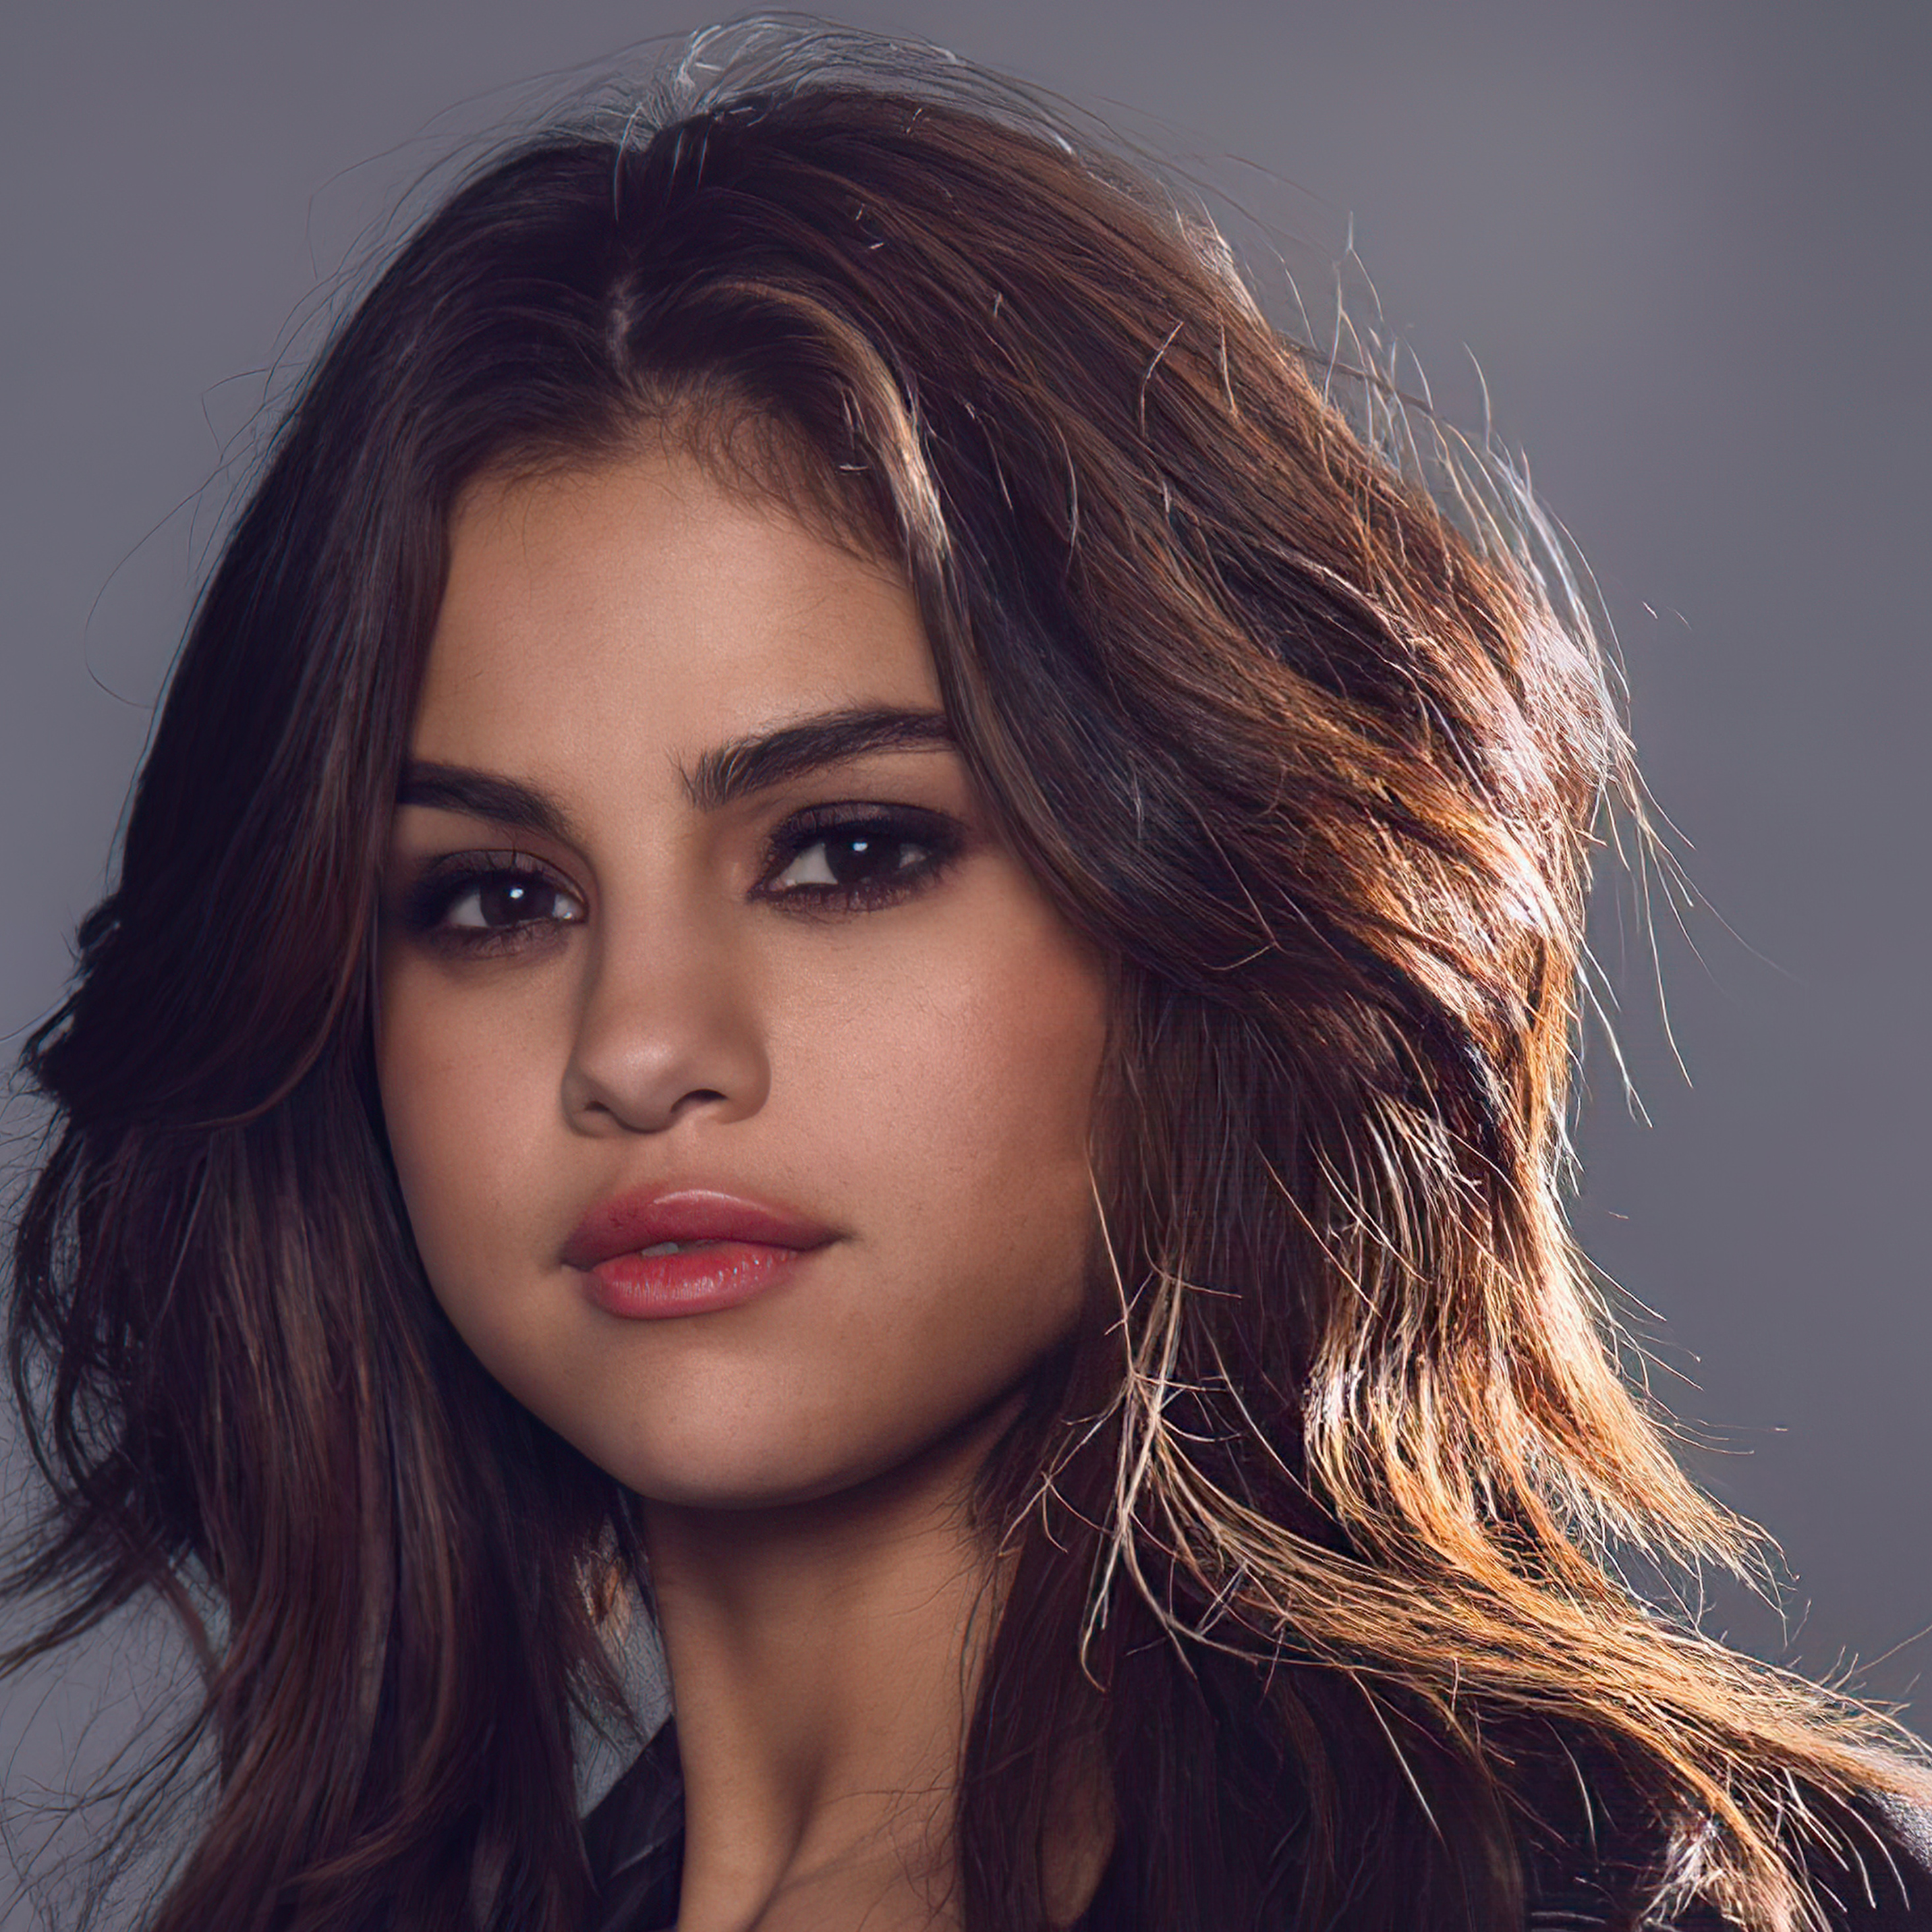 Top 10 Photos HQ  # 108 Selena Gomez 4x6 Photo Set 